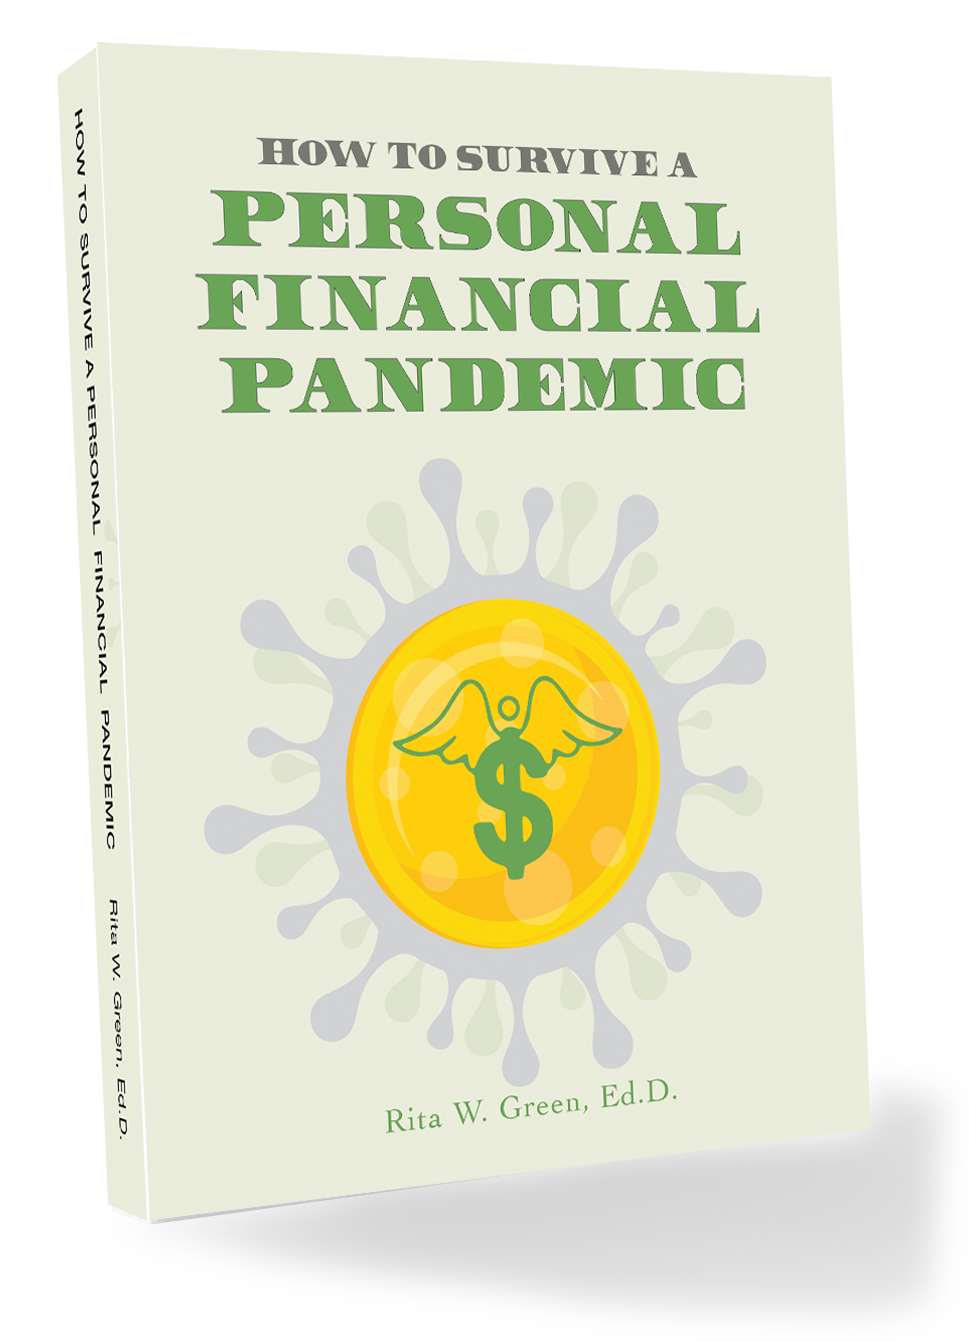 Personal Financial Pandemic